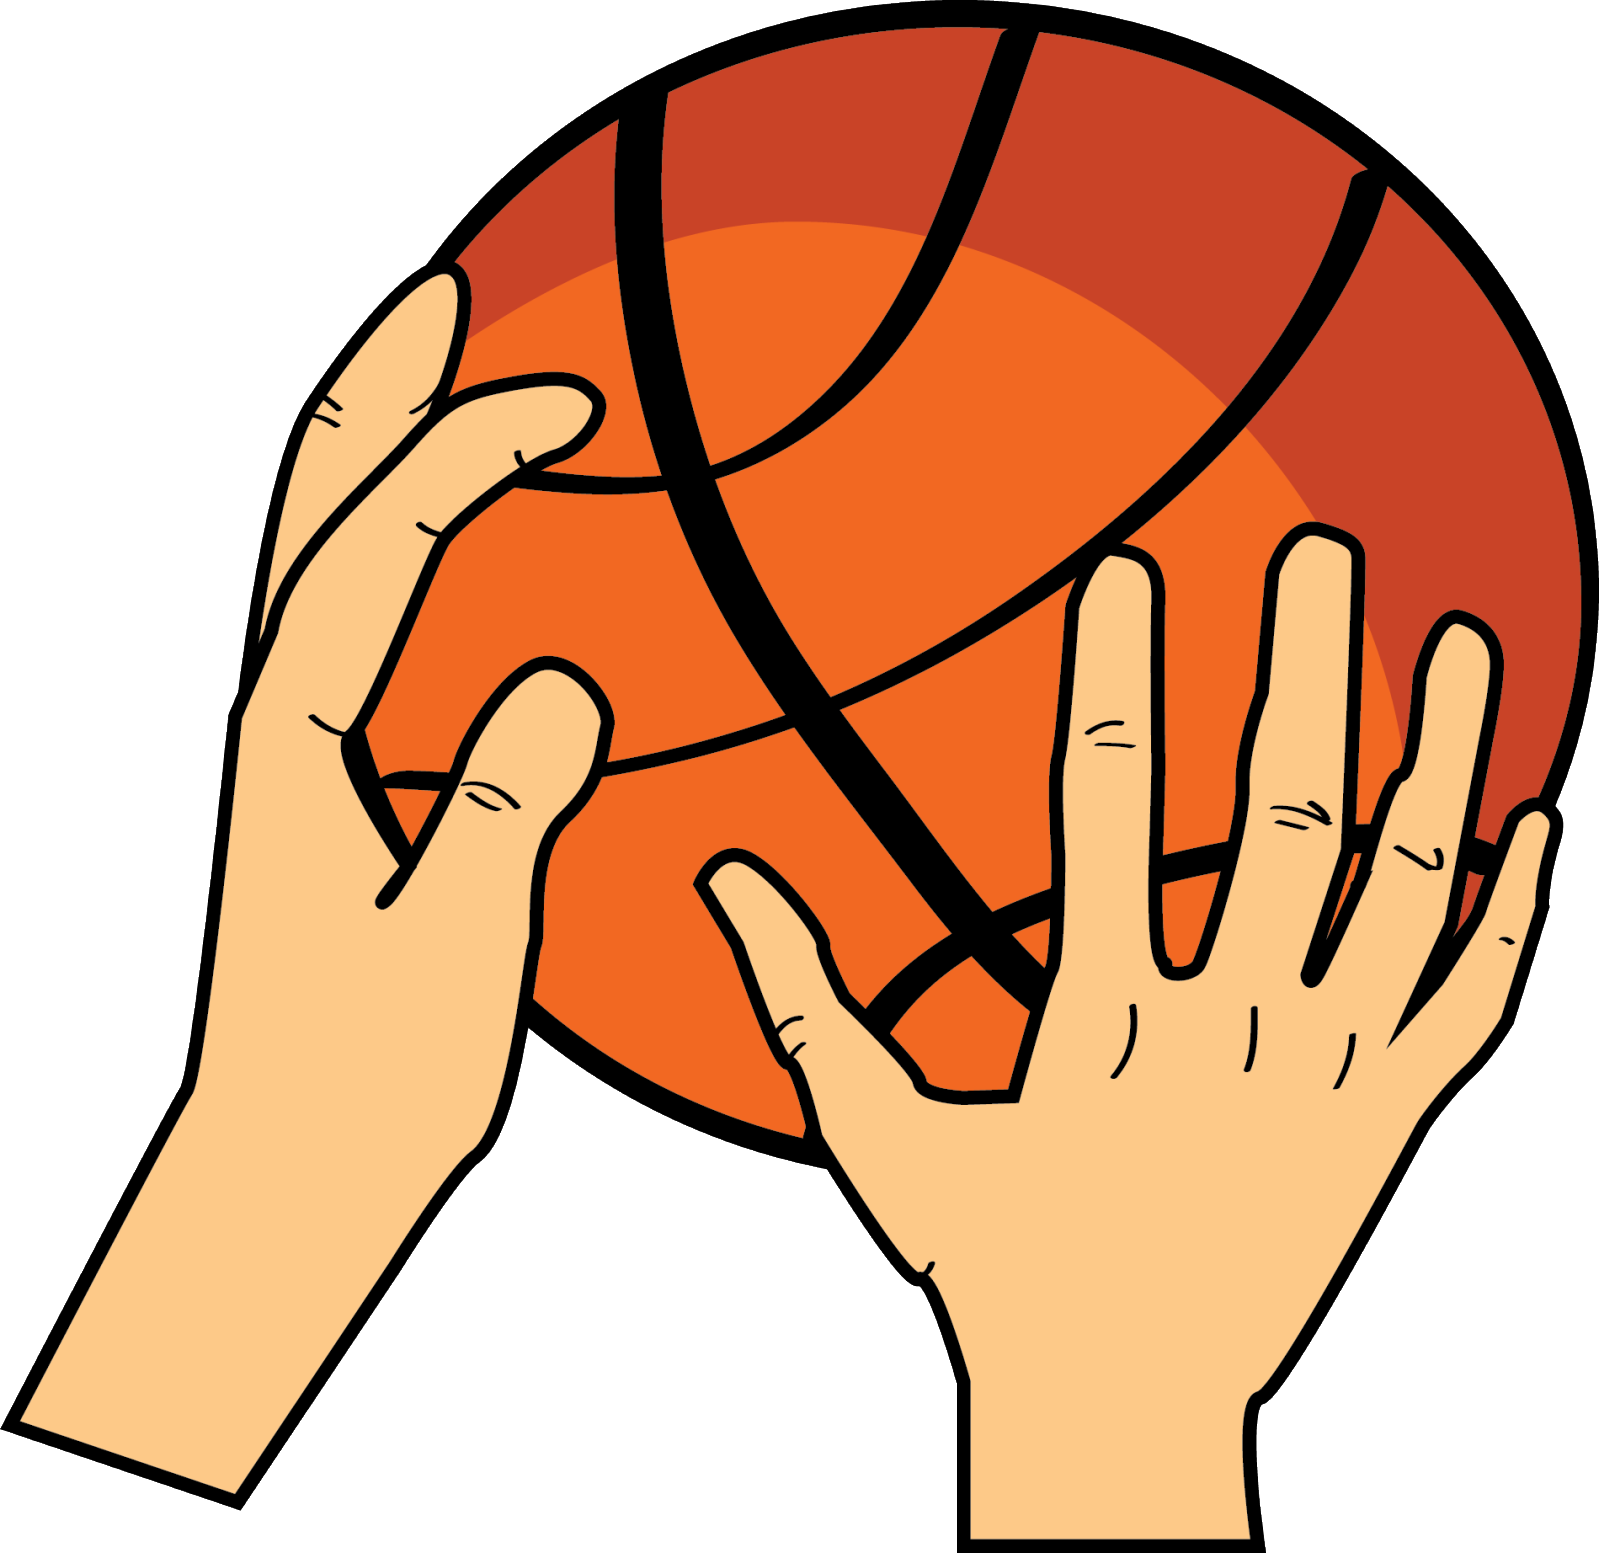 Drawn Amd Basketball - Basketball In Hand Drawing (1599x1553)